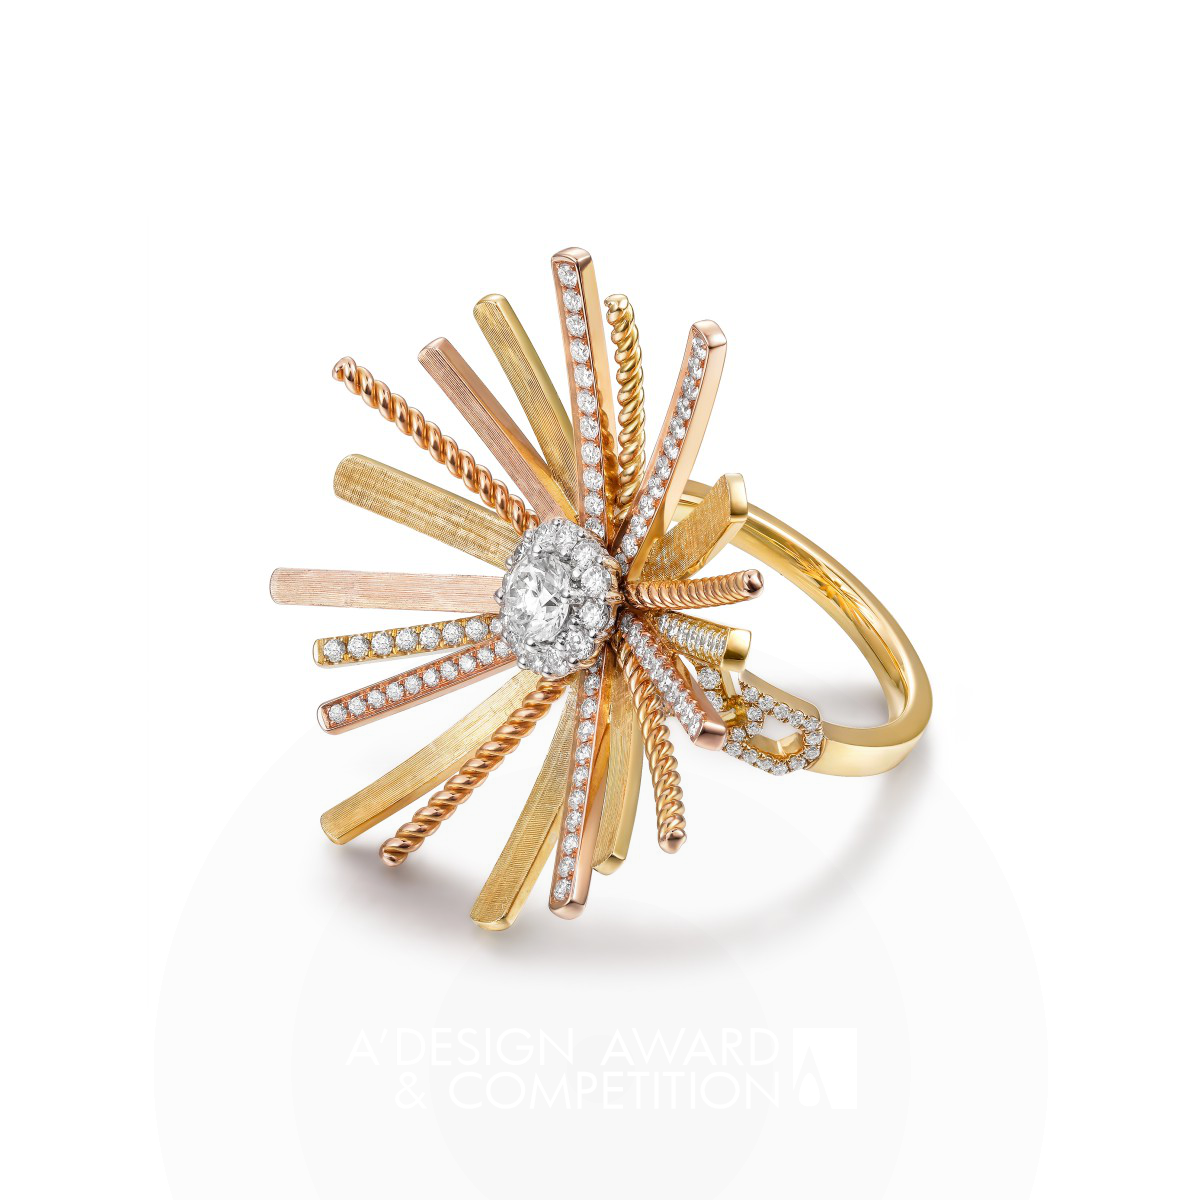 Richard Wu Unveils Exquisite Dandelion Ring